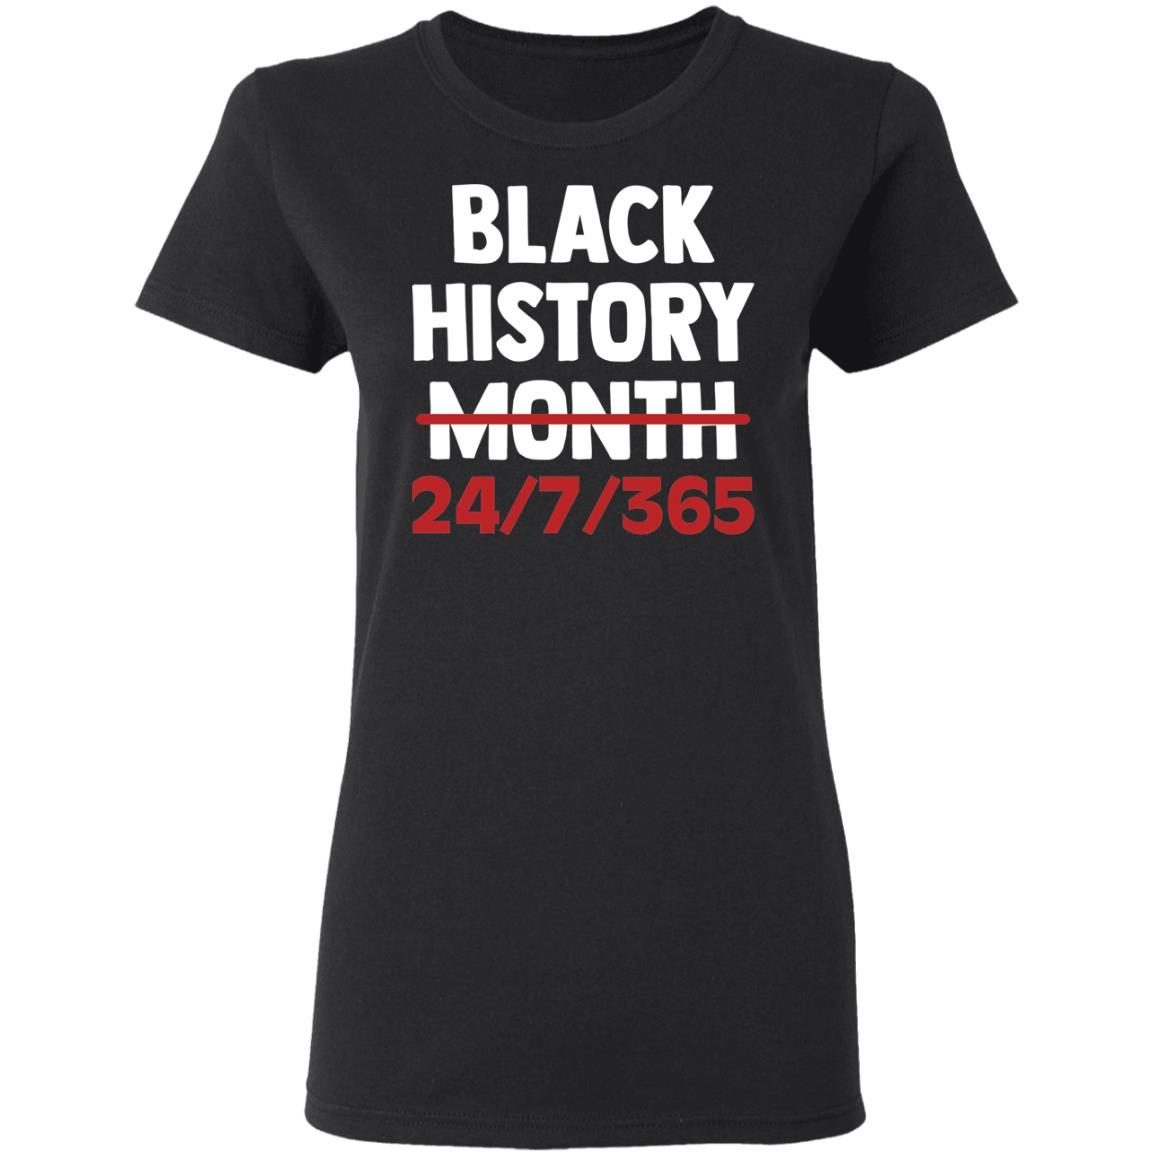 Black history month 24/7/365 shirt 2